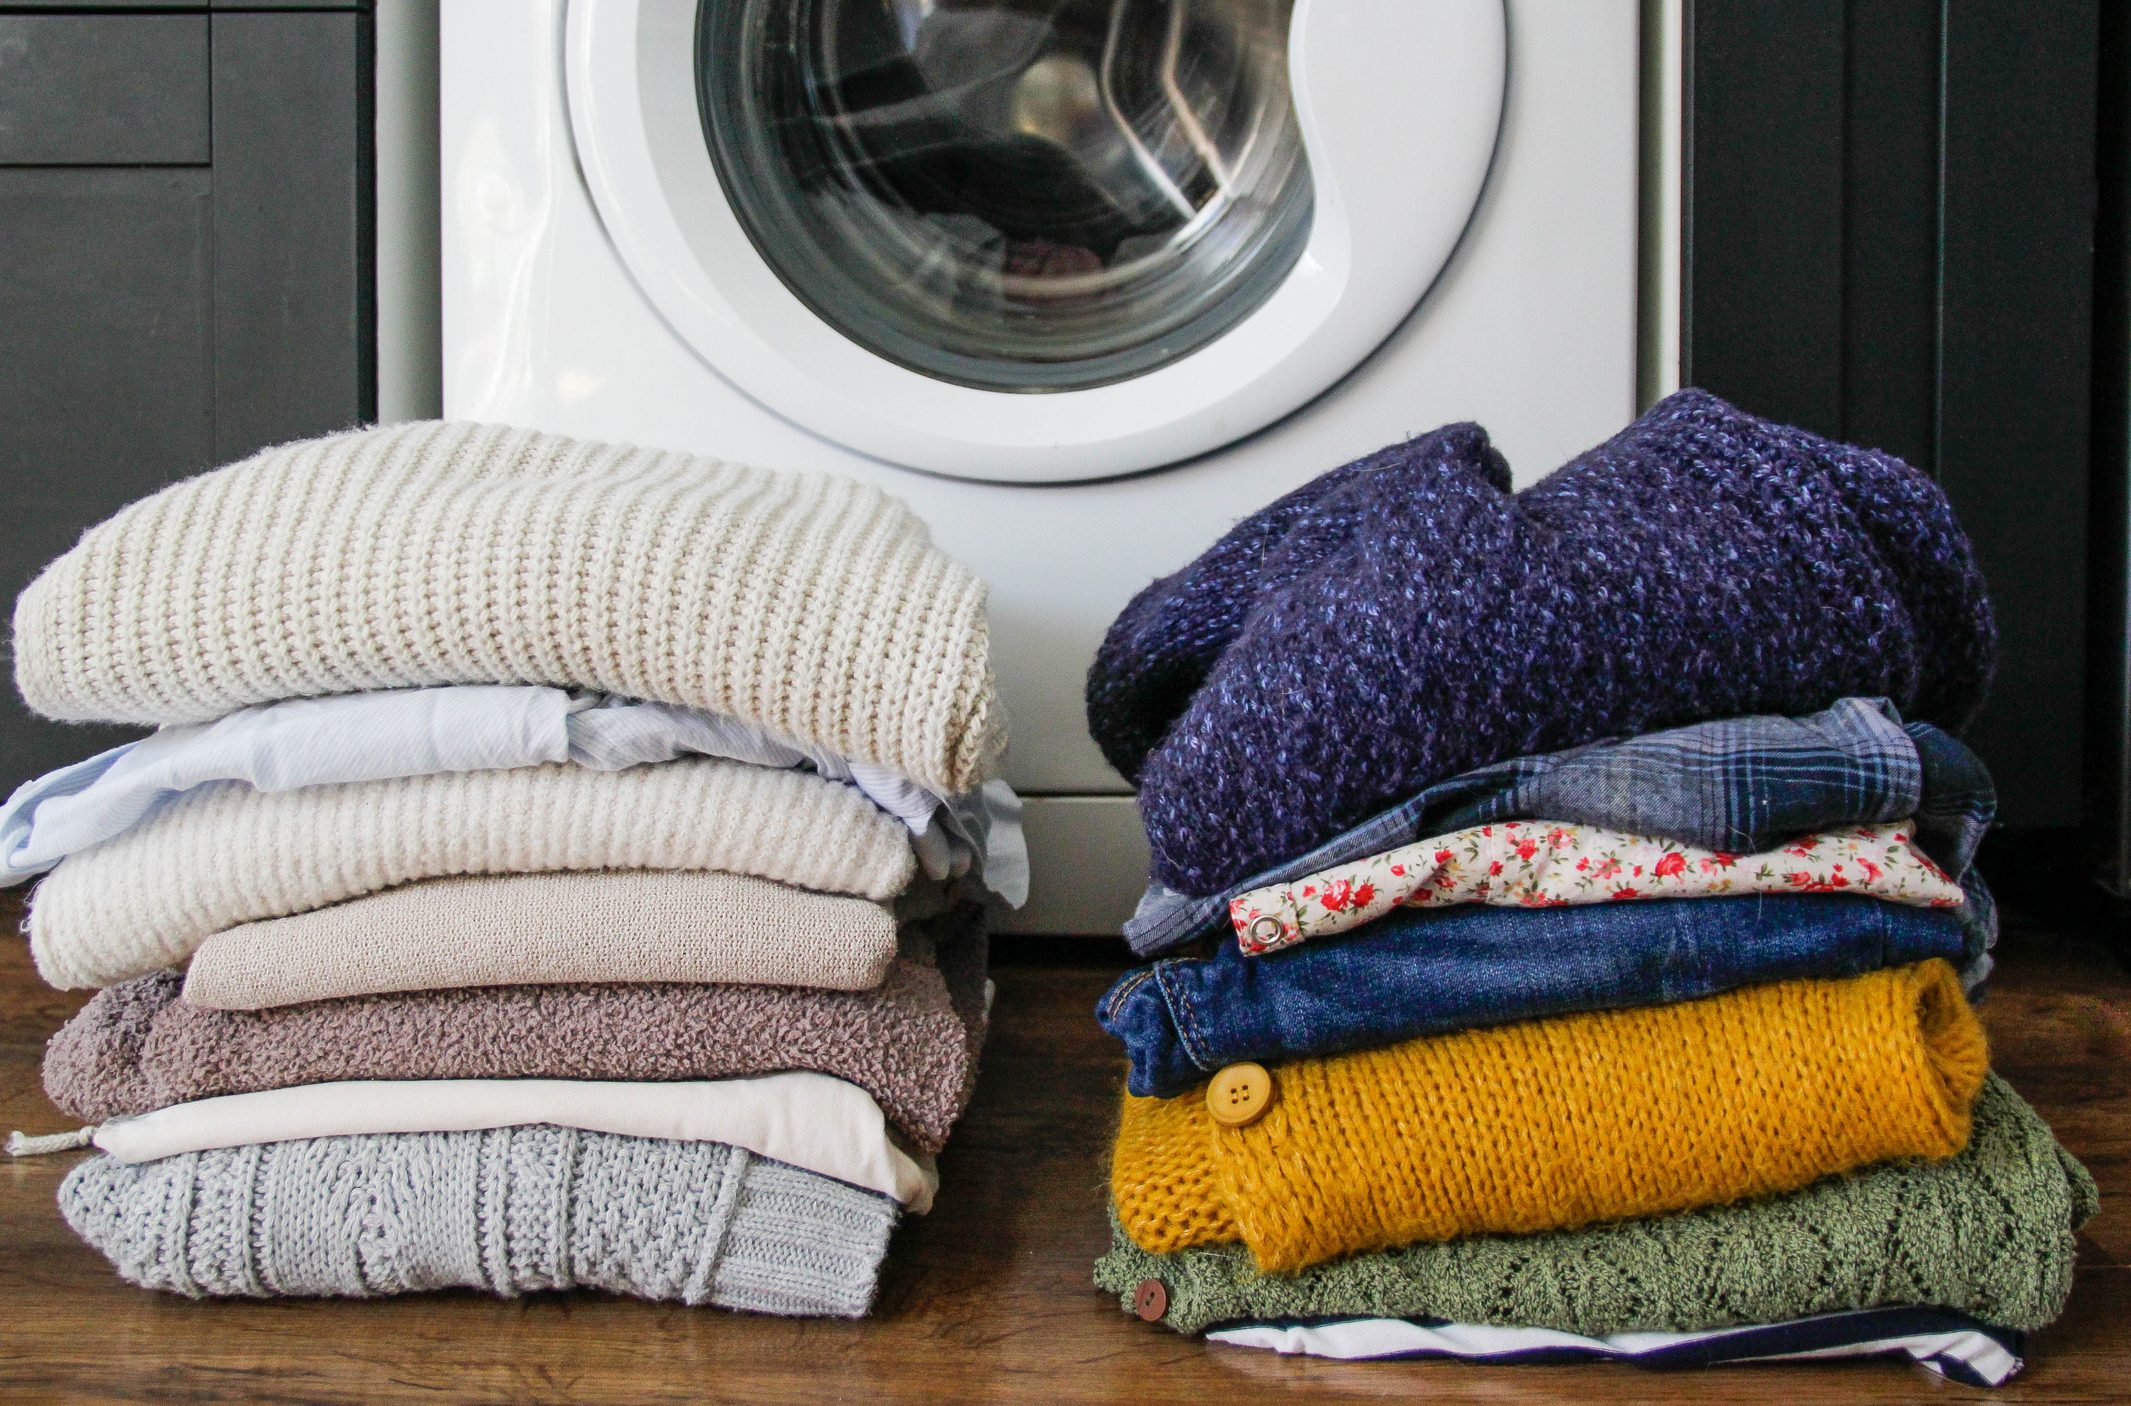 Why I Sort Family Laundry Into Smaller Laundry Baskets